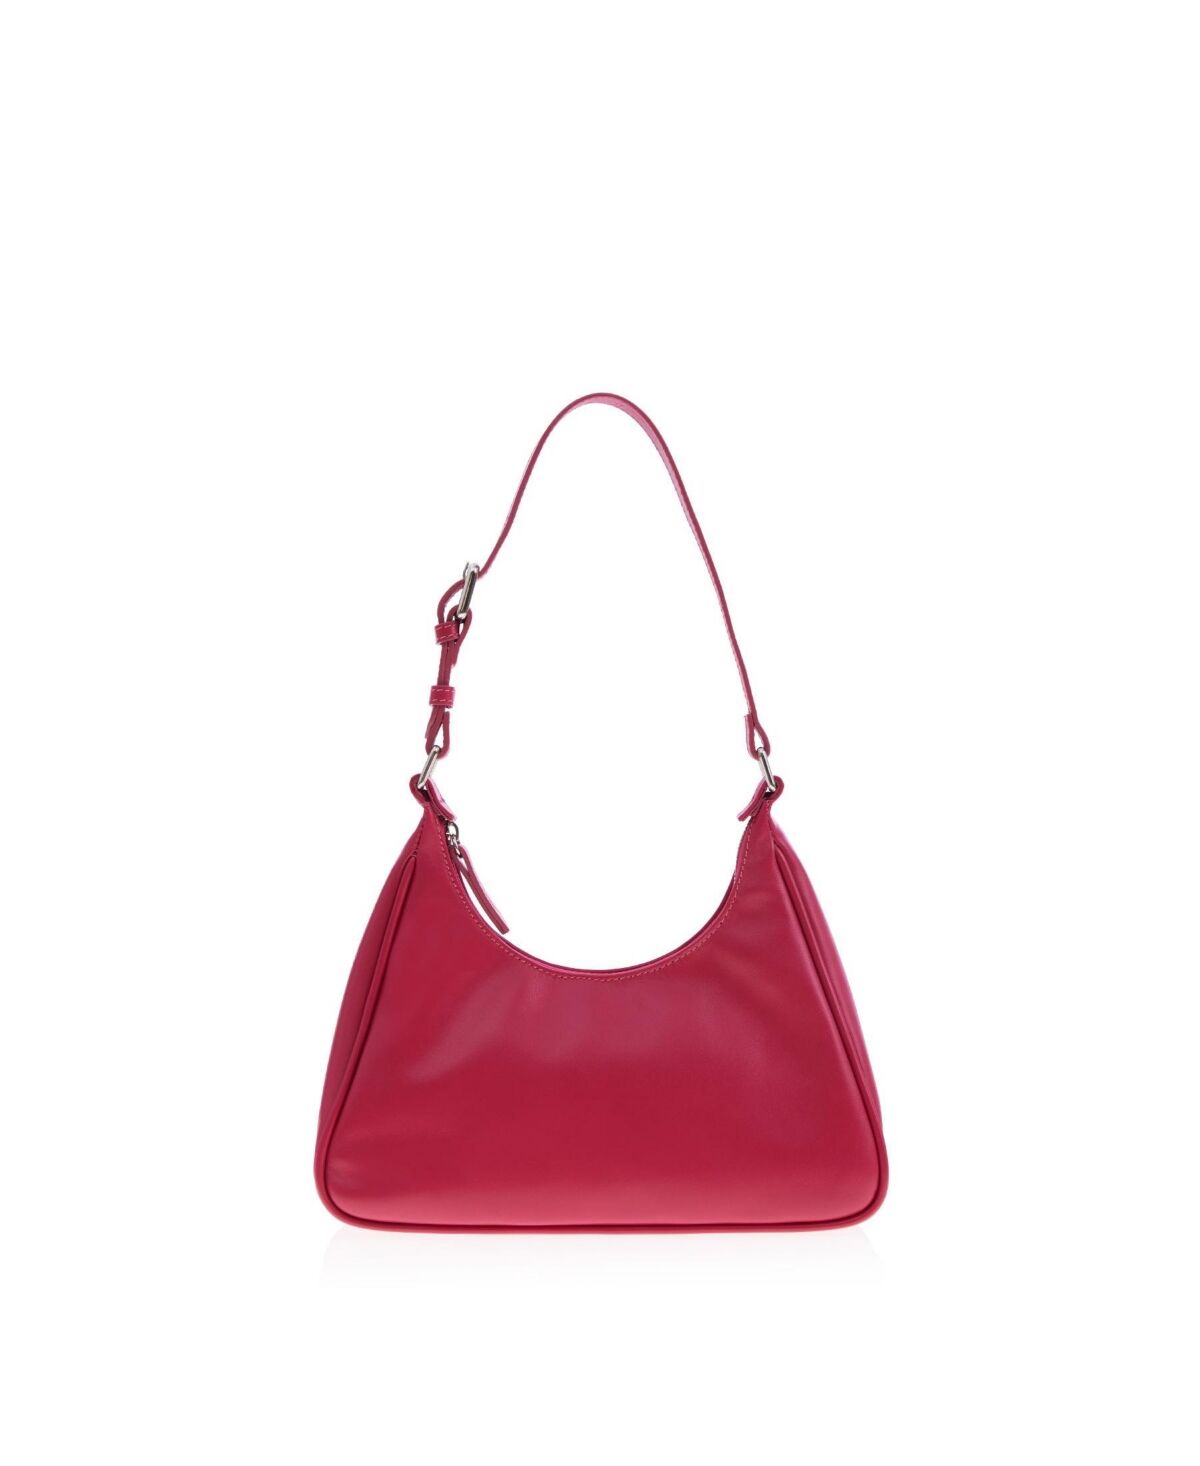 Joanna Maxham Women's Leather Prism Hobo Bag ( Dark Pink) - Dark Pink Leather